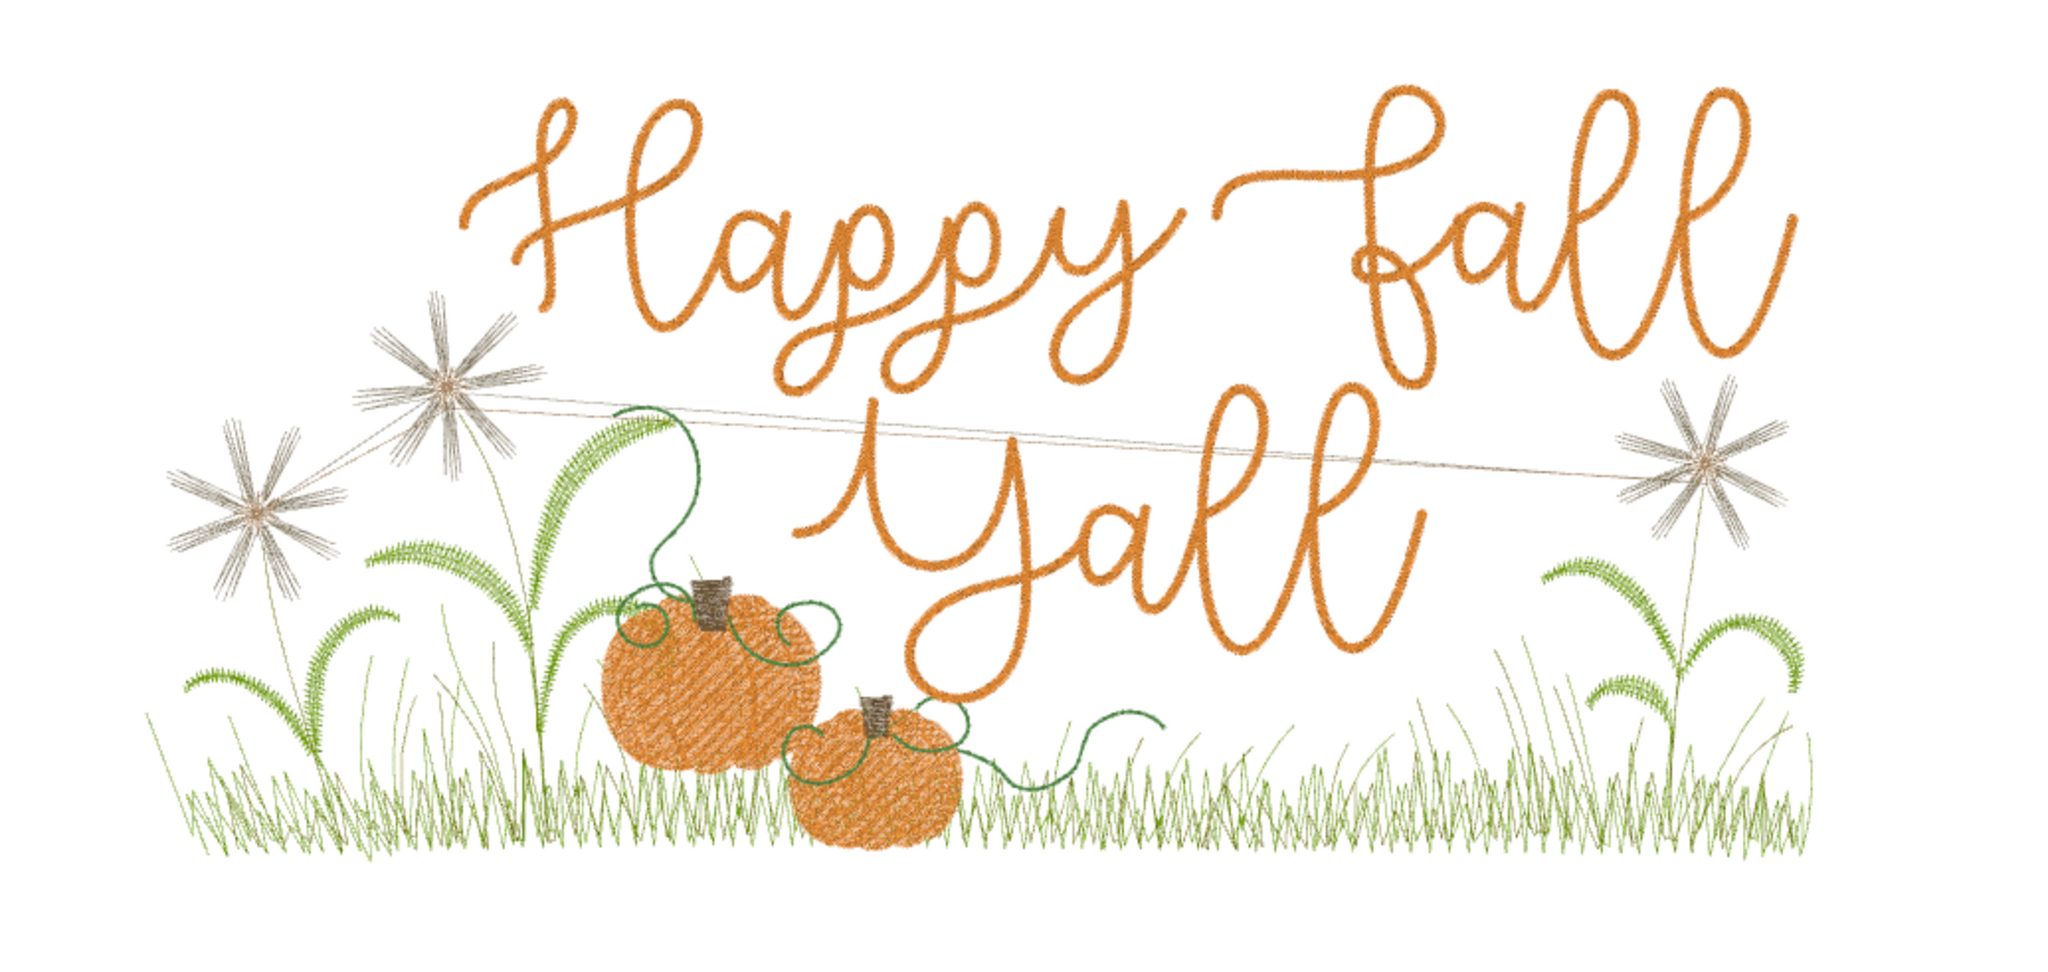 Happy Fall Yall!